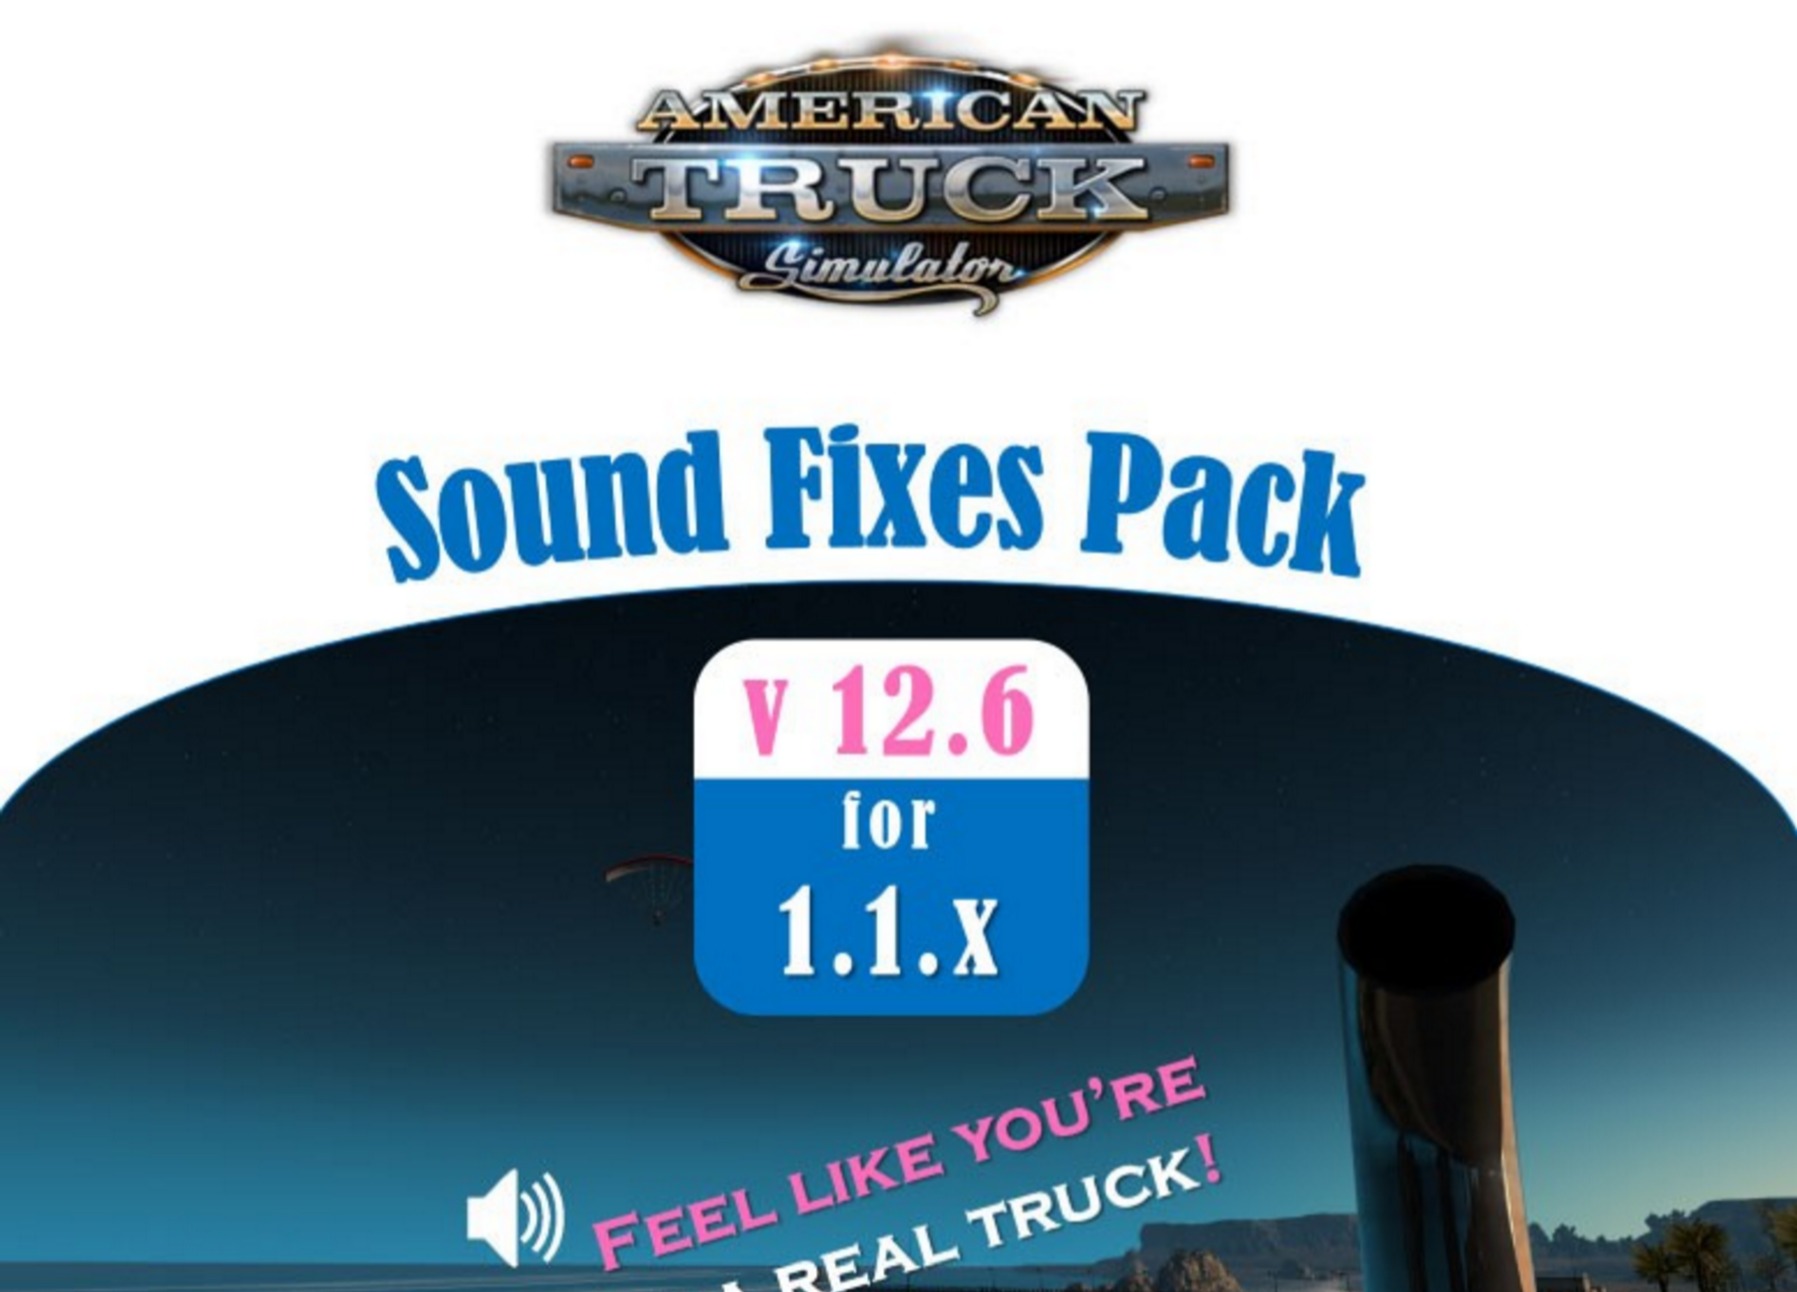 Sound Fixes Pack v 12.6